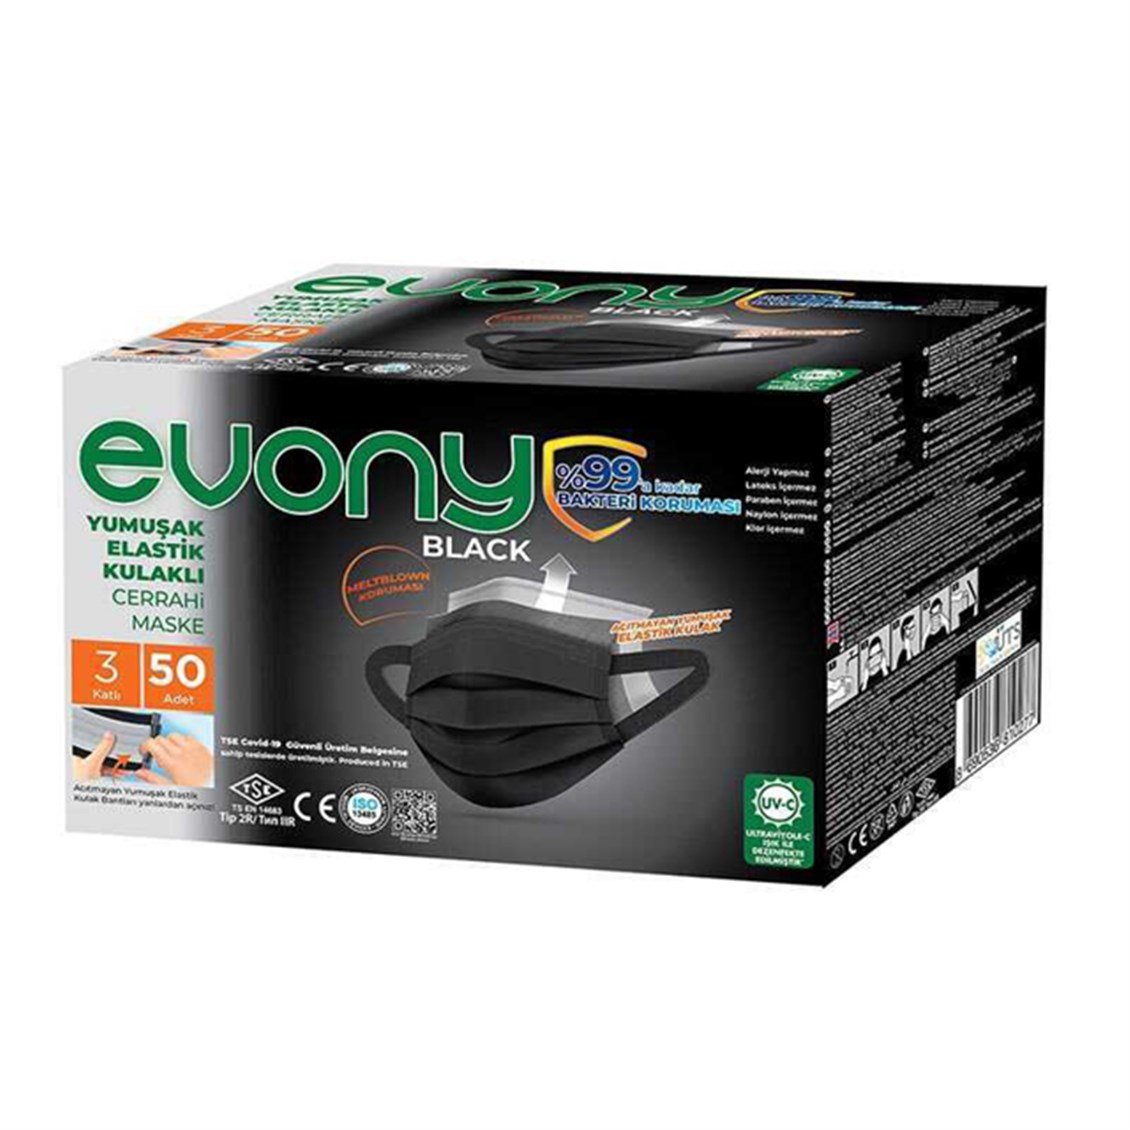 Evony Black 3 Katlı Yumuşak Elastik Kulaklı Siyah 50'li Cerrahi Maske -  Onur Market